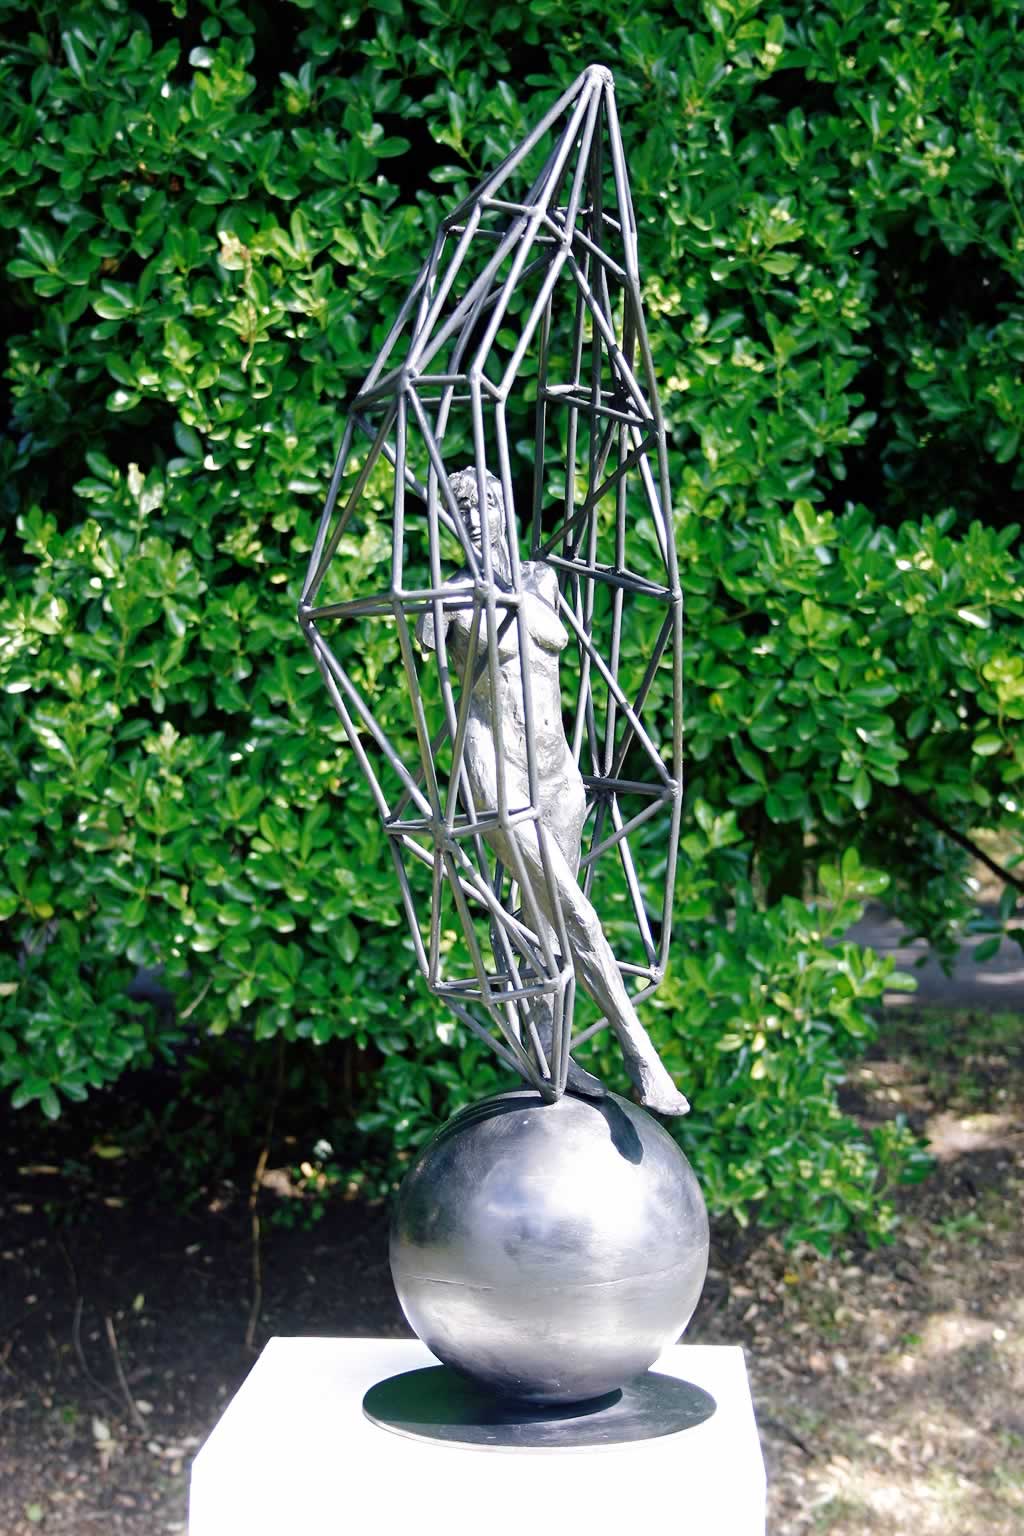 Mandorla (abstract figurative sculpture) by sculptor Ian Campbell-Briggs